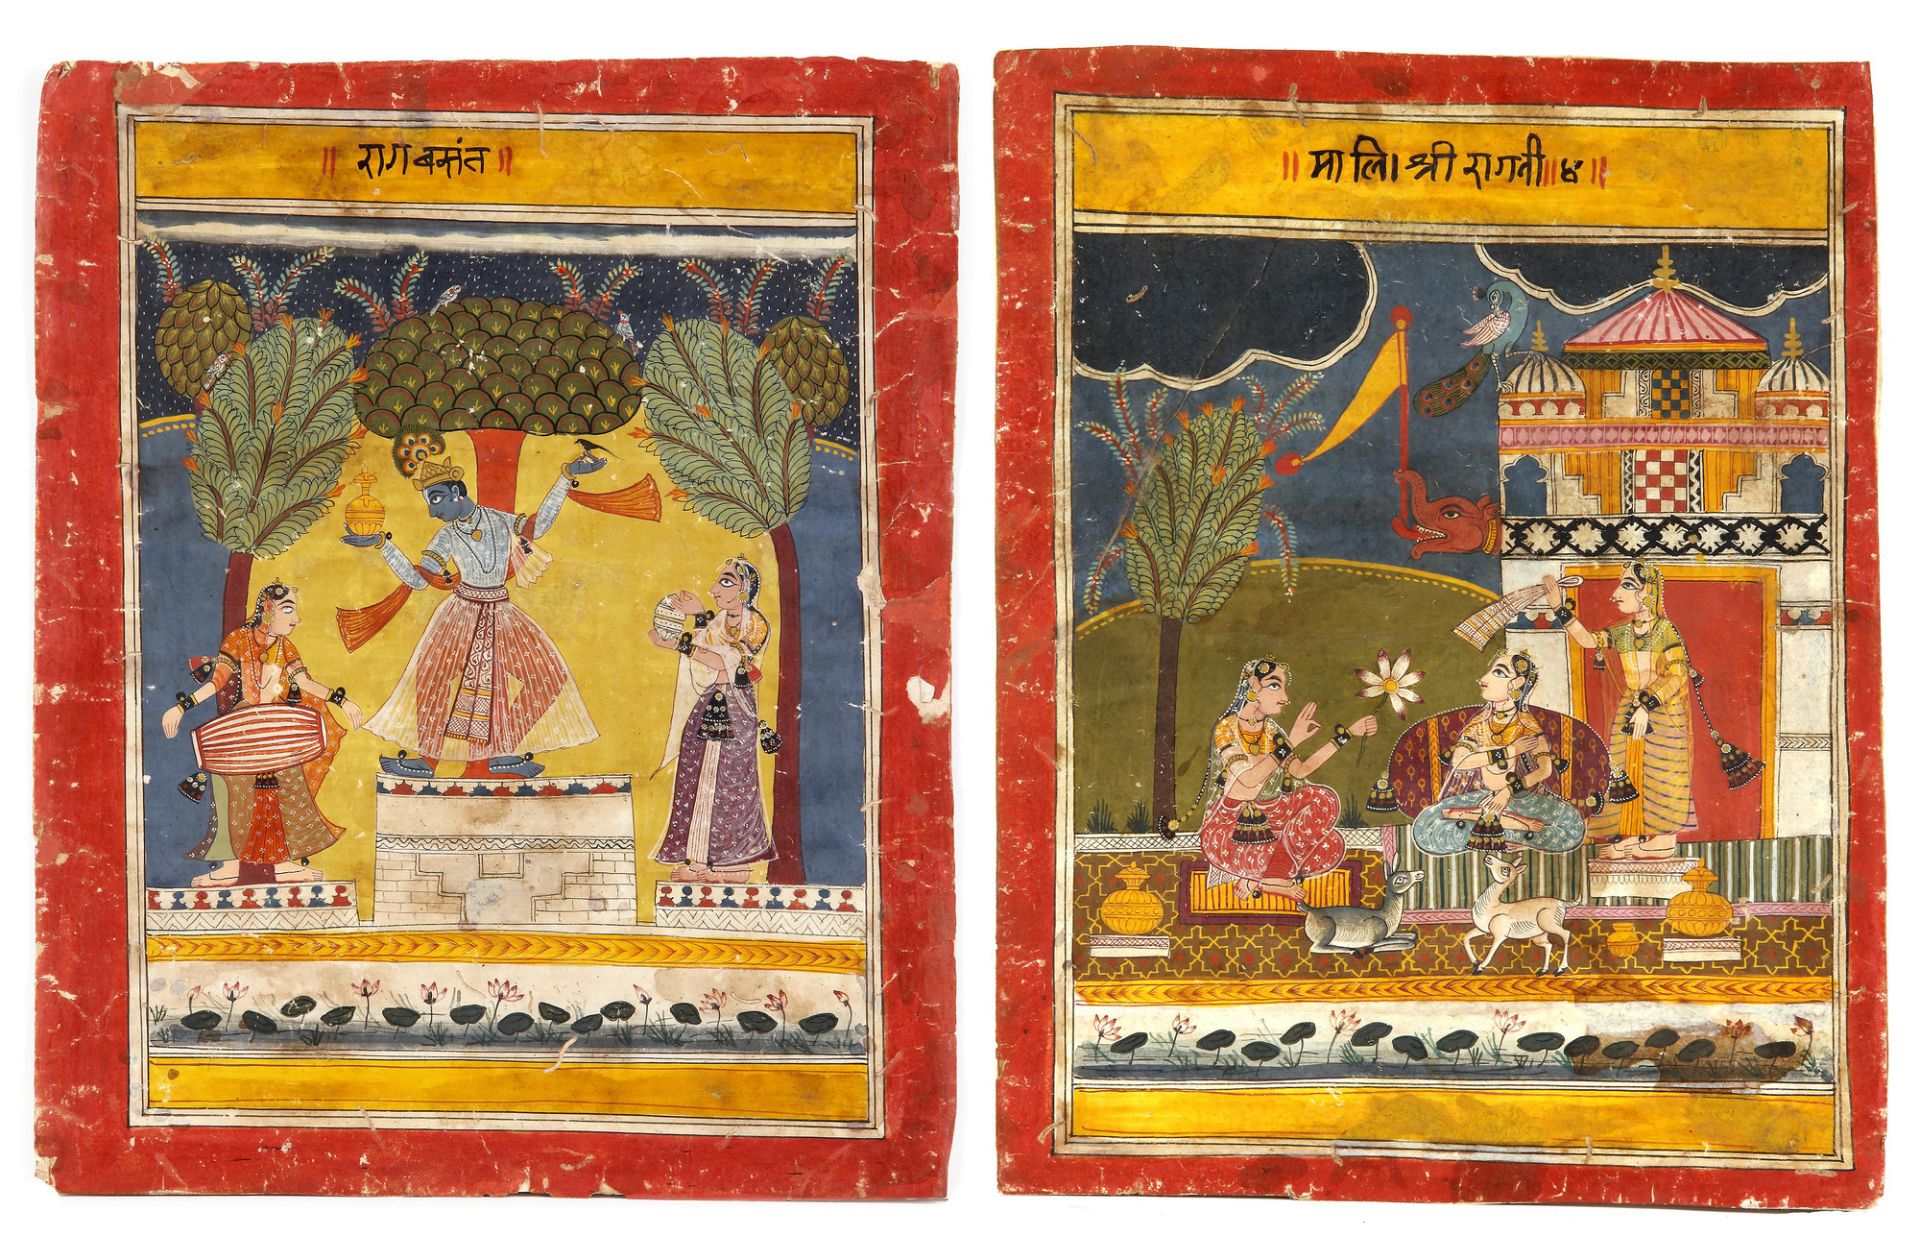 AN ILLUSTRATION FROM THE RAGAMALA SERIES, SHRI RAGA, CENTRAL INDIA, MALWA 17TH CENTURY - Image 3 of 6